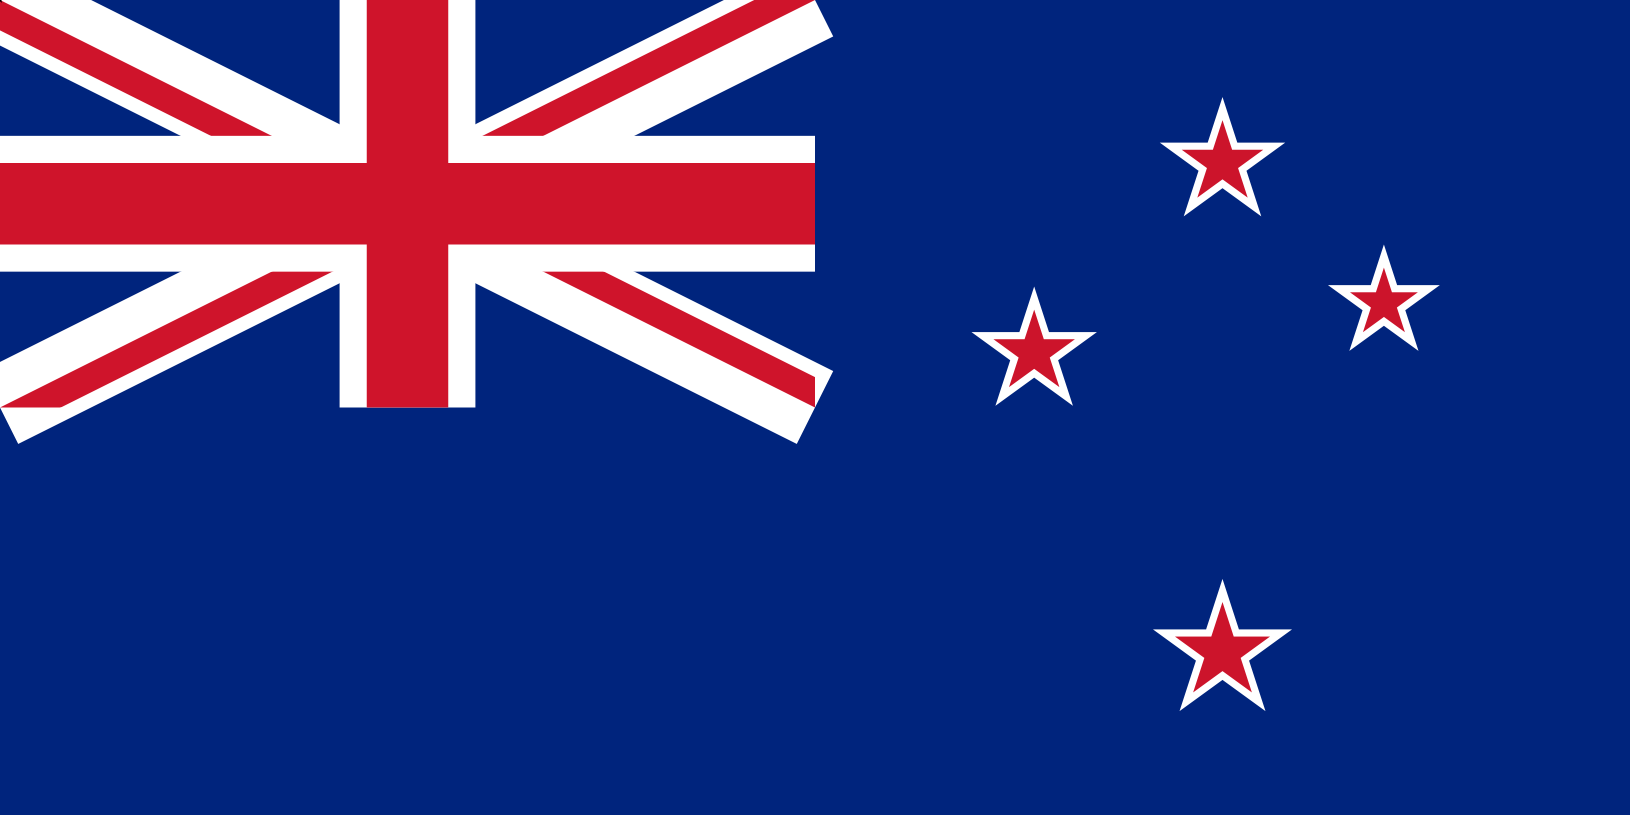 Podoba nacionalno zastavo države Nova Zelandija v resoluciji 1630x815